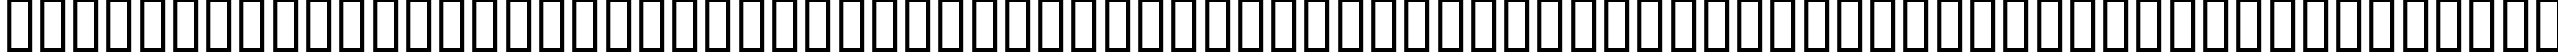 Пример написания английского алфавита шрифтом BD Wurst